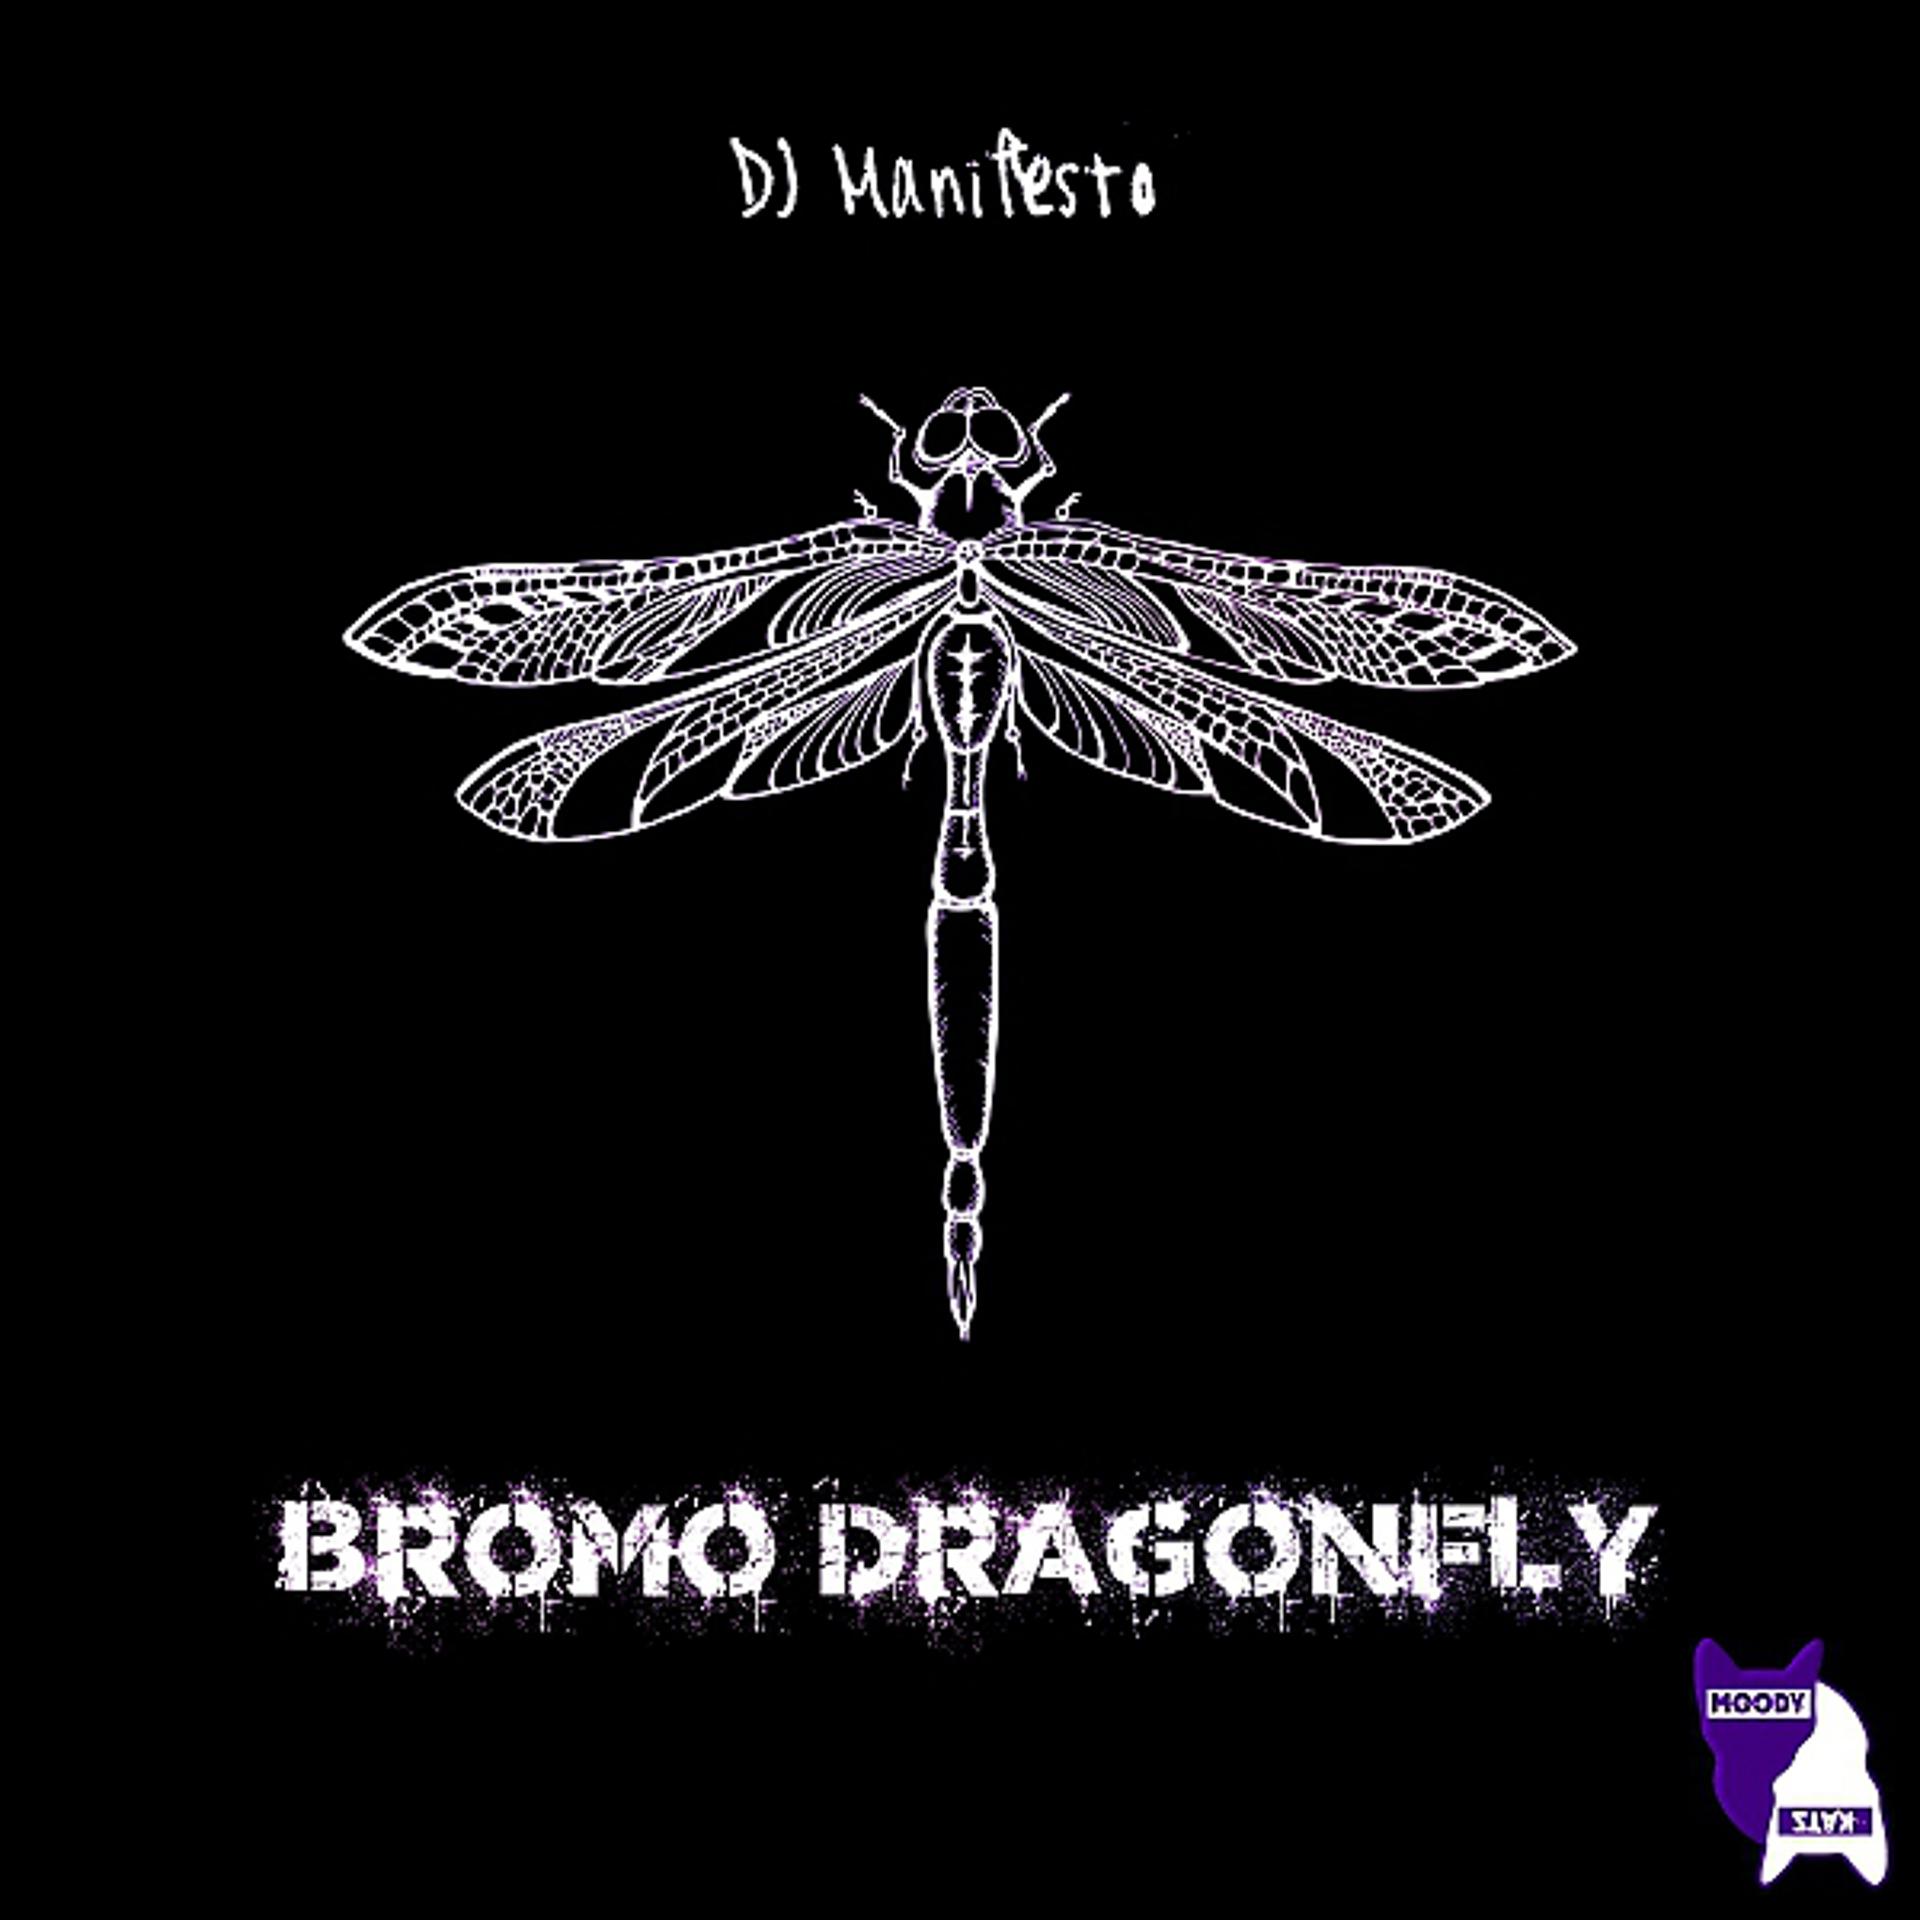 Bromo dragonfly что. Бромо Драгонфлай. Bromo Dragonfly наркотик. Bromo-Dragonfly трип. Bromo Dragonfly в России.